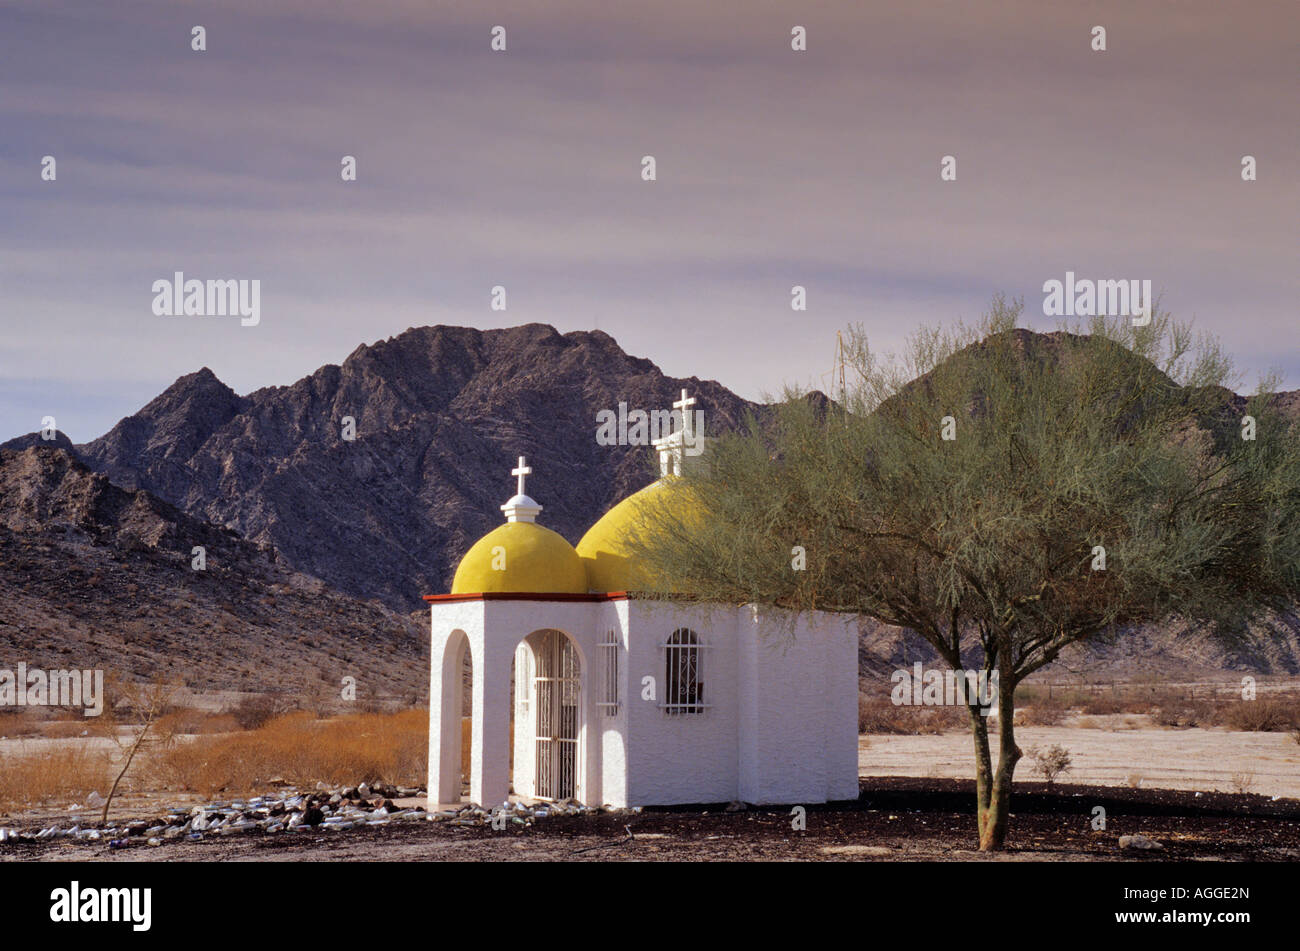 Am Straßenrand Kapelle in Sonora-Wüste, Mexiko Stockfoto